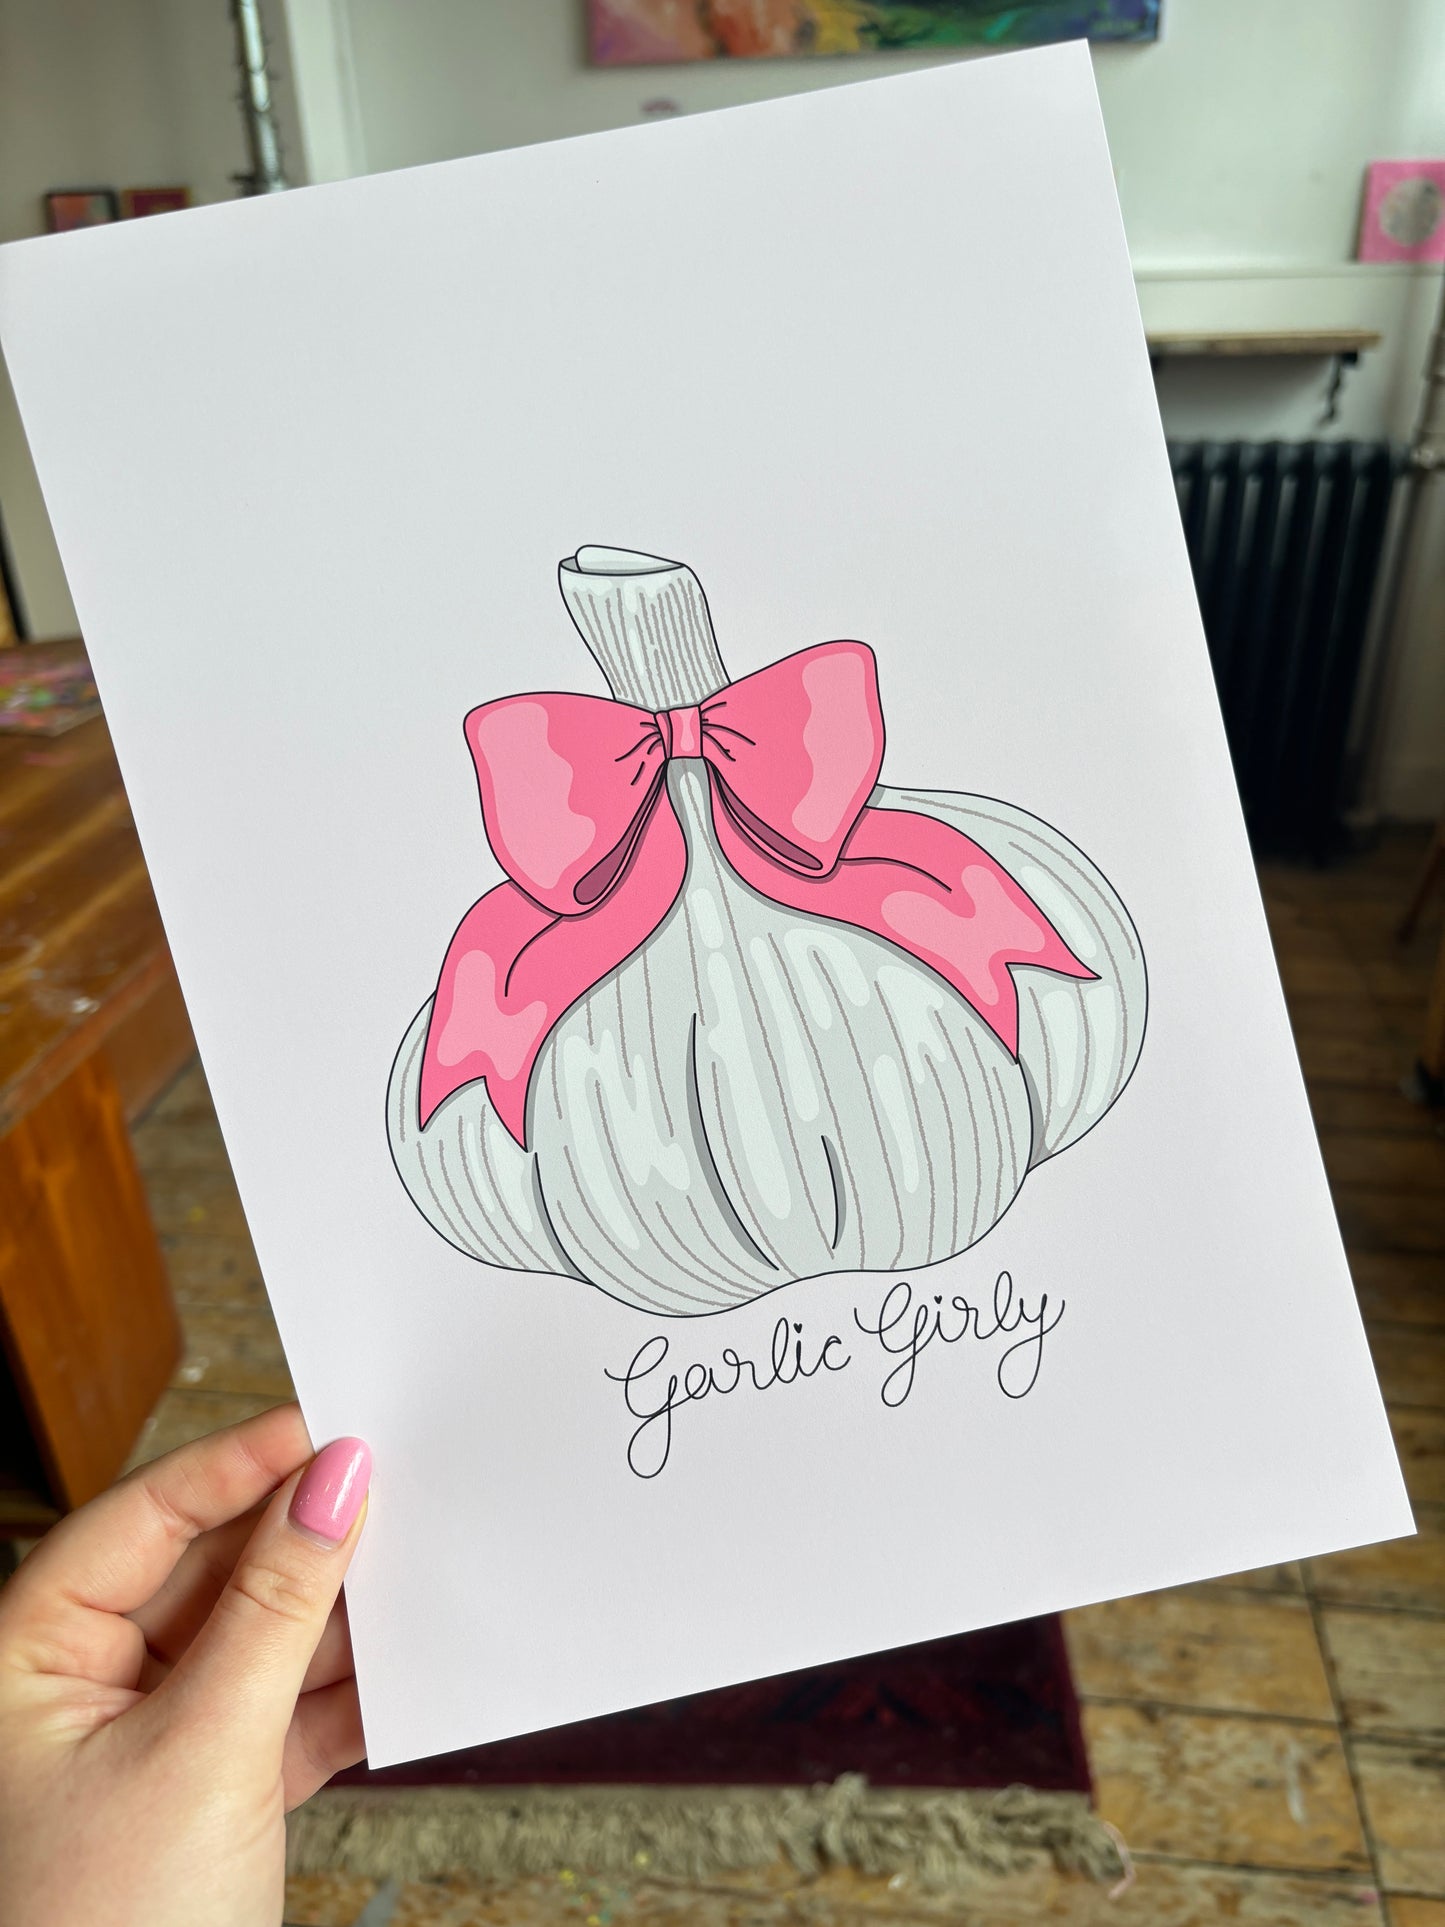 Garlic Girly Print